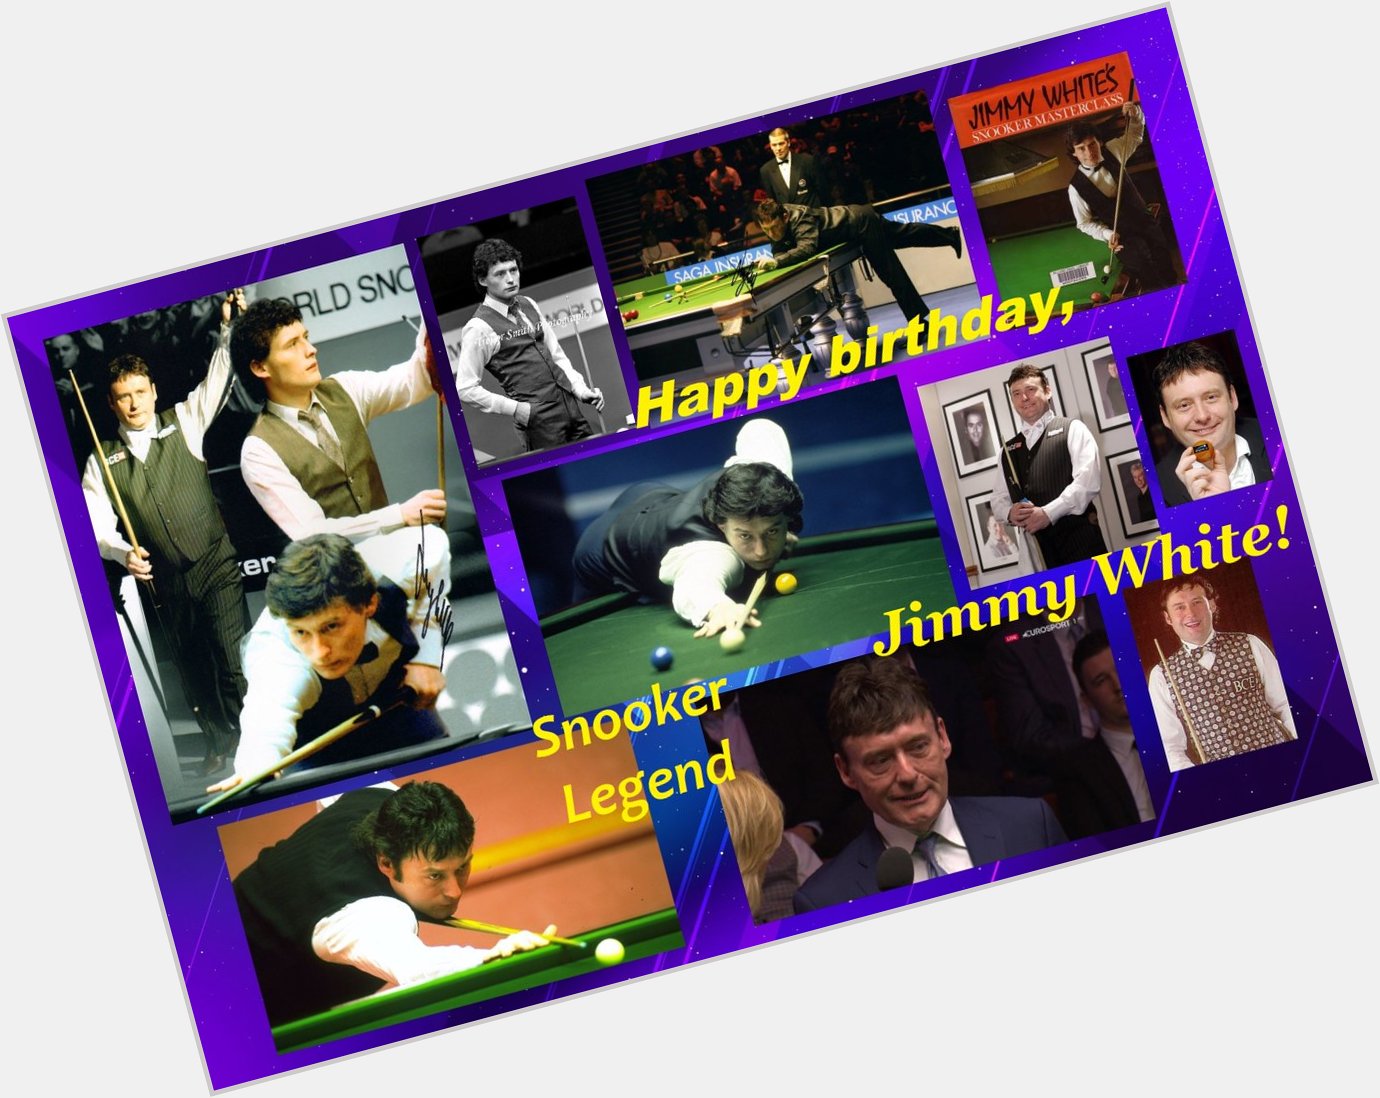 Happy birthday, Legend of Snooker wild-card 2017 season Jimmy White!  